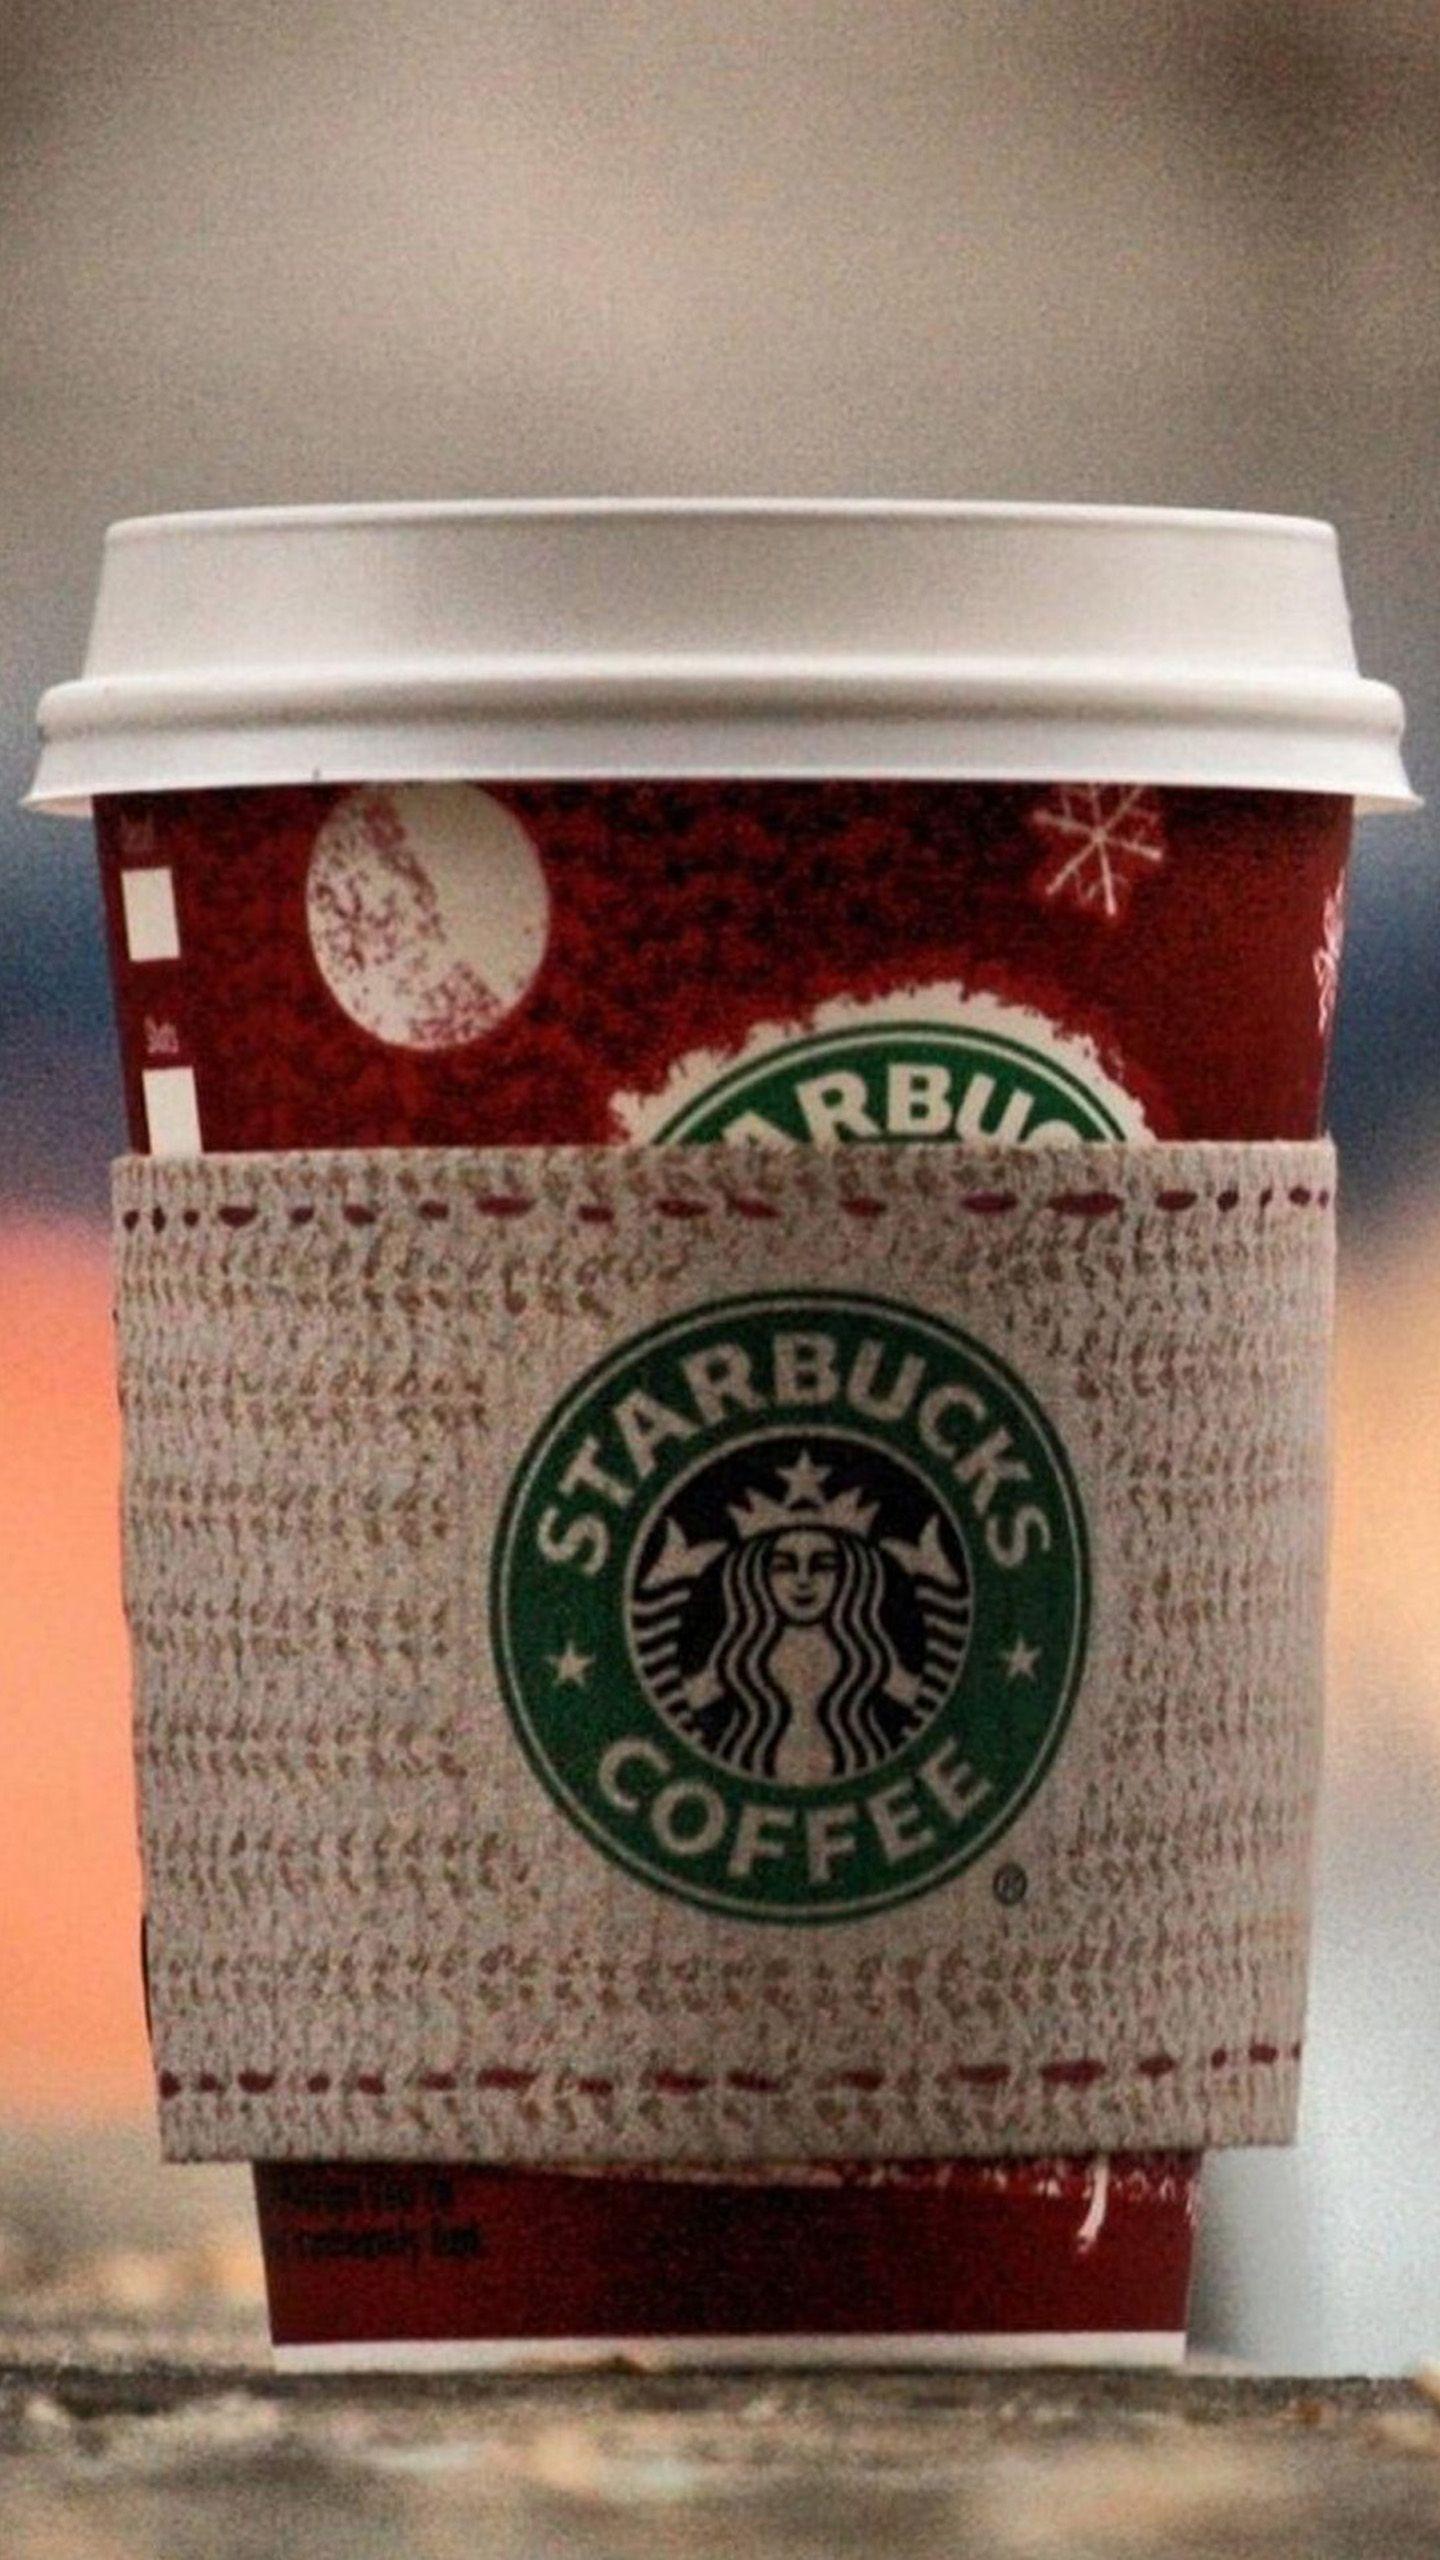 Starbucks Coffee Galaxy Note 4 Wallpaper